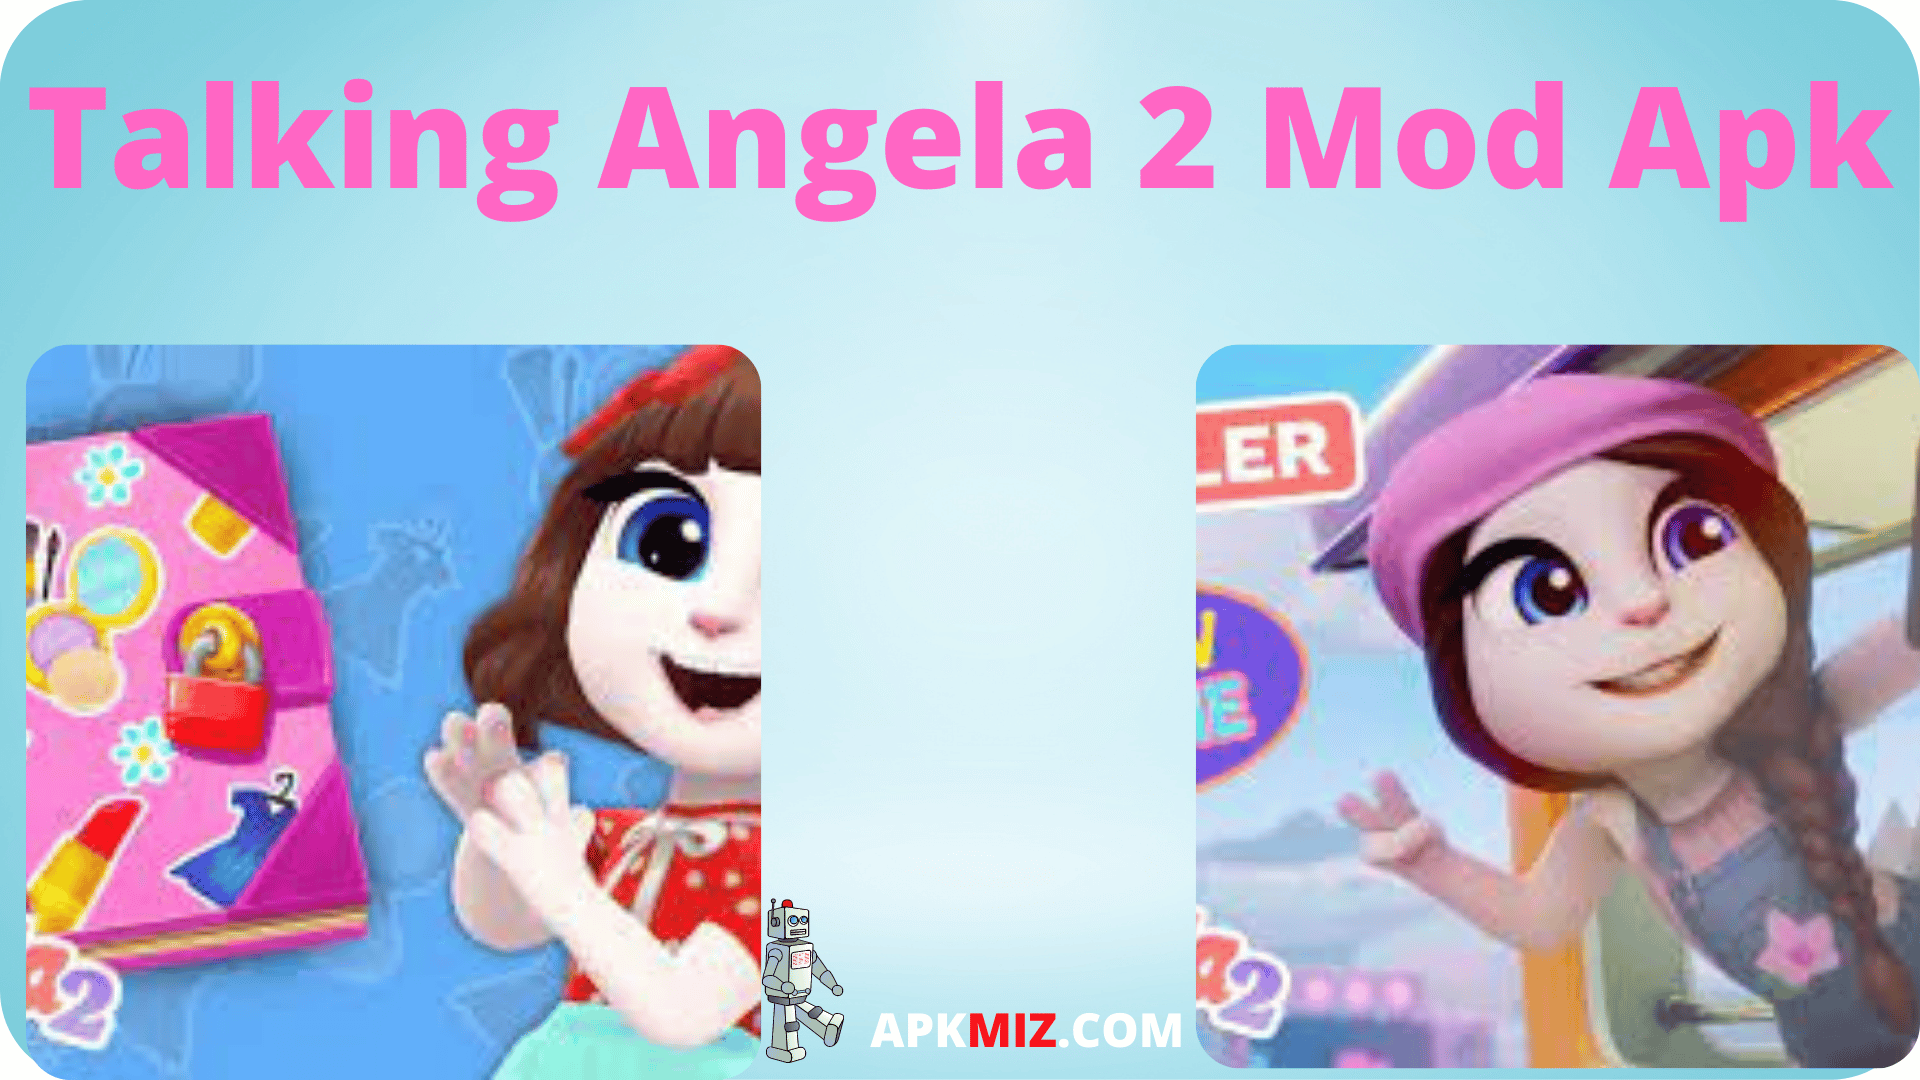 Talking Angela 2 Mod Apk